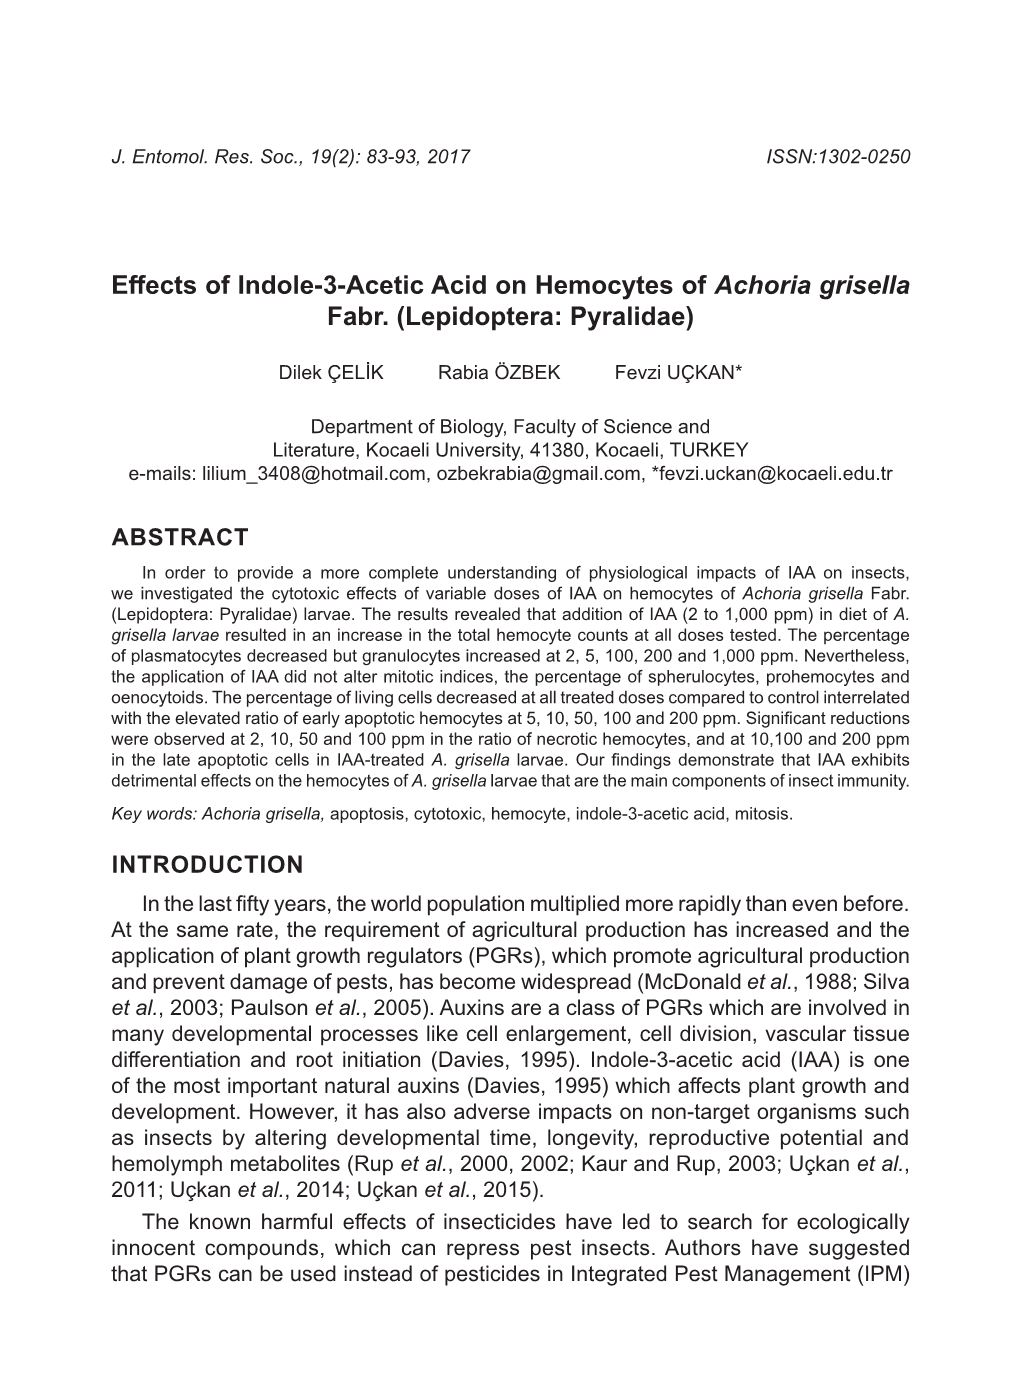 Effects of Indole-3-Acetic Acid on Hemocytes of Achoria Grisella Fabr